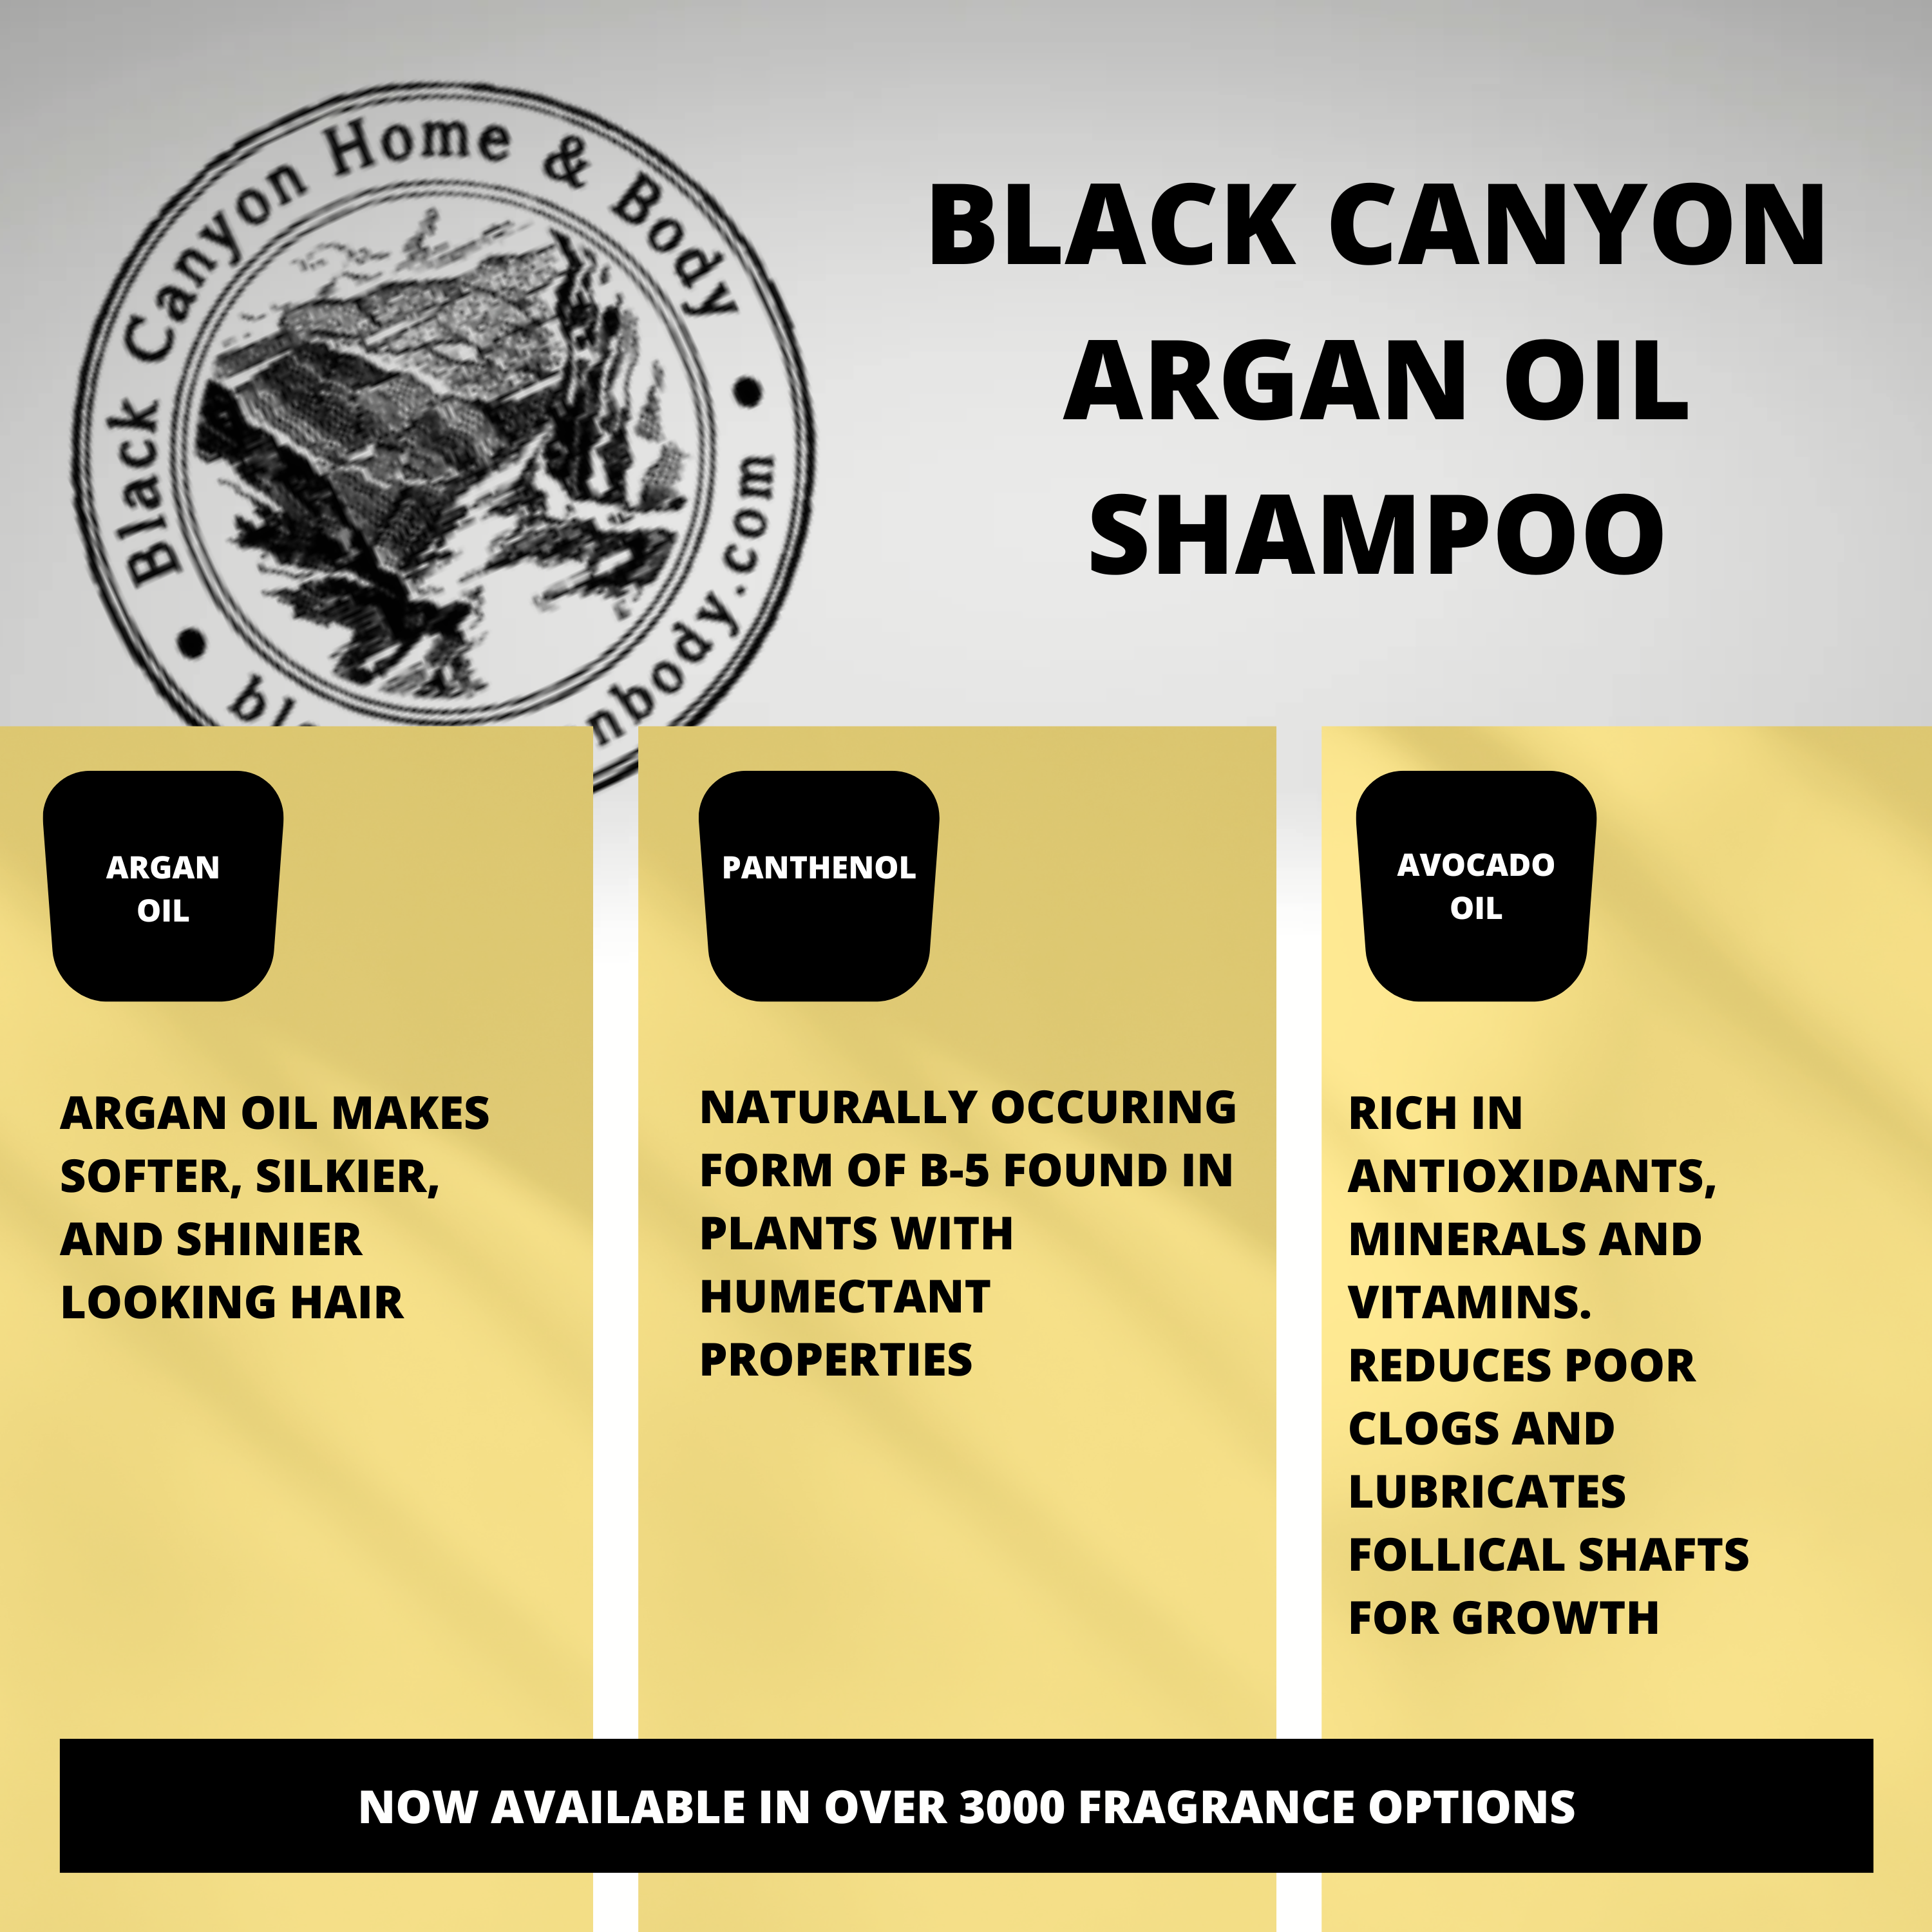 Black Canyon Frangipani Scented Shampoo with Argan Oil